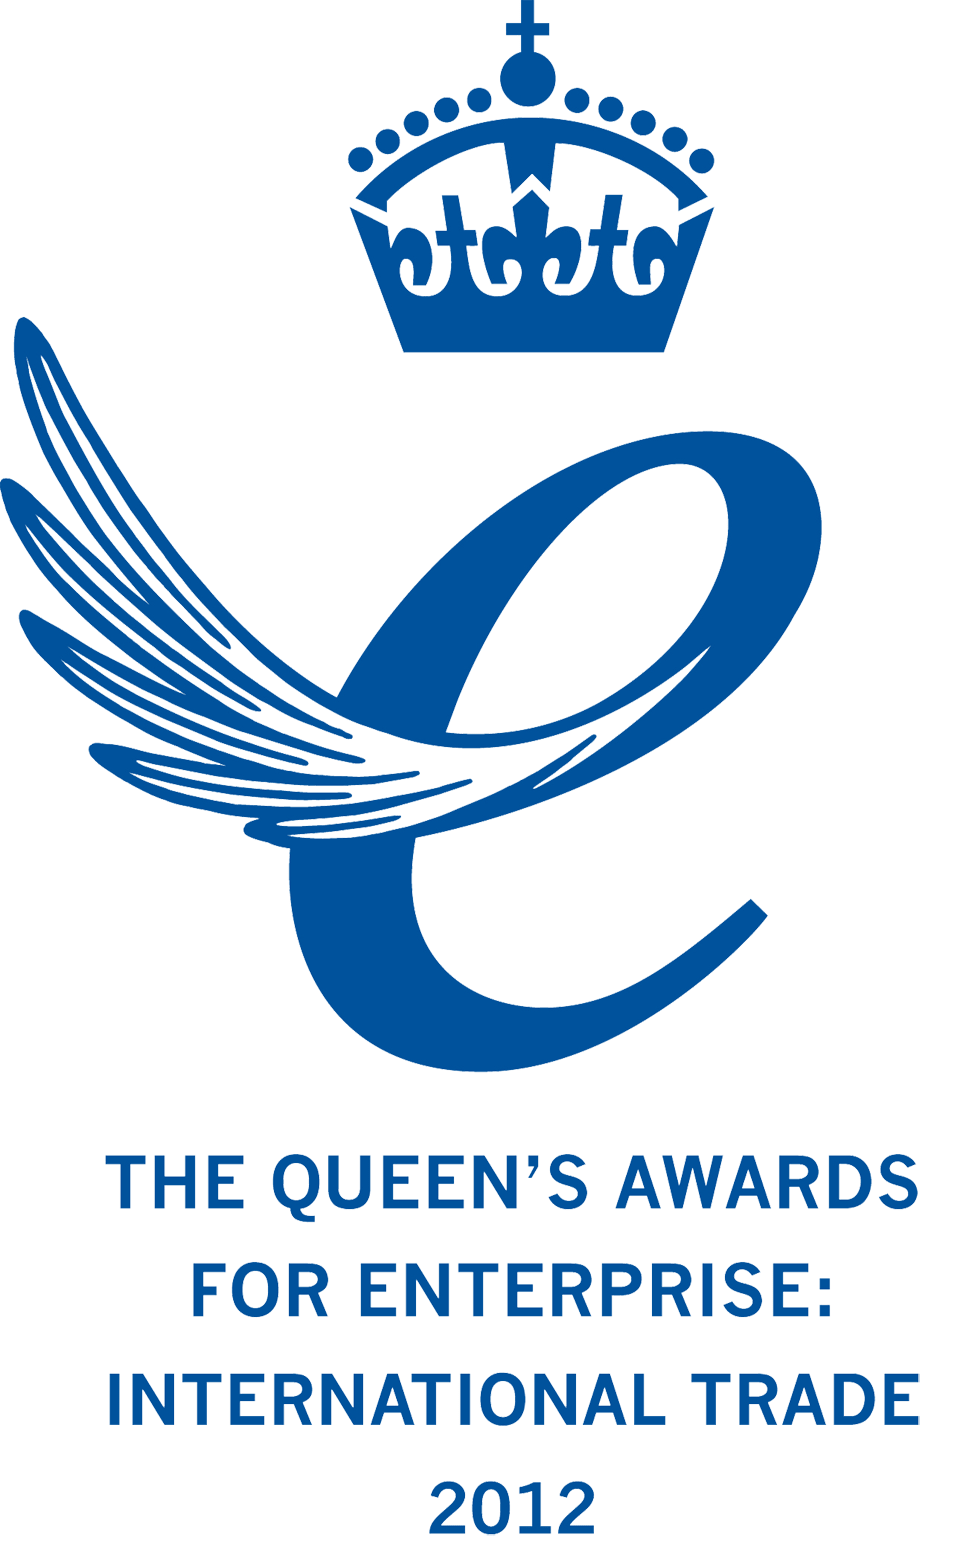 The Queen's Awards for Enterprise: International Trade 2012